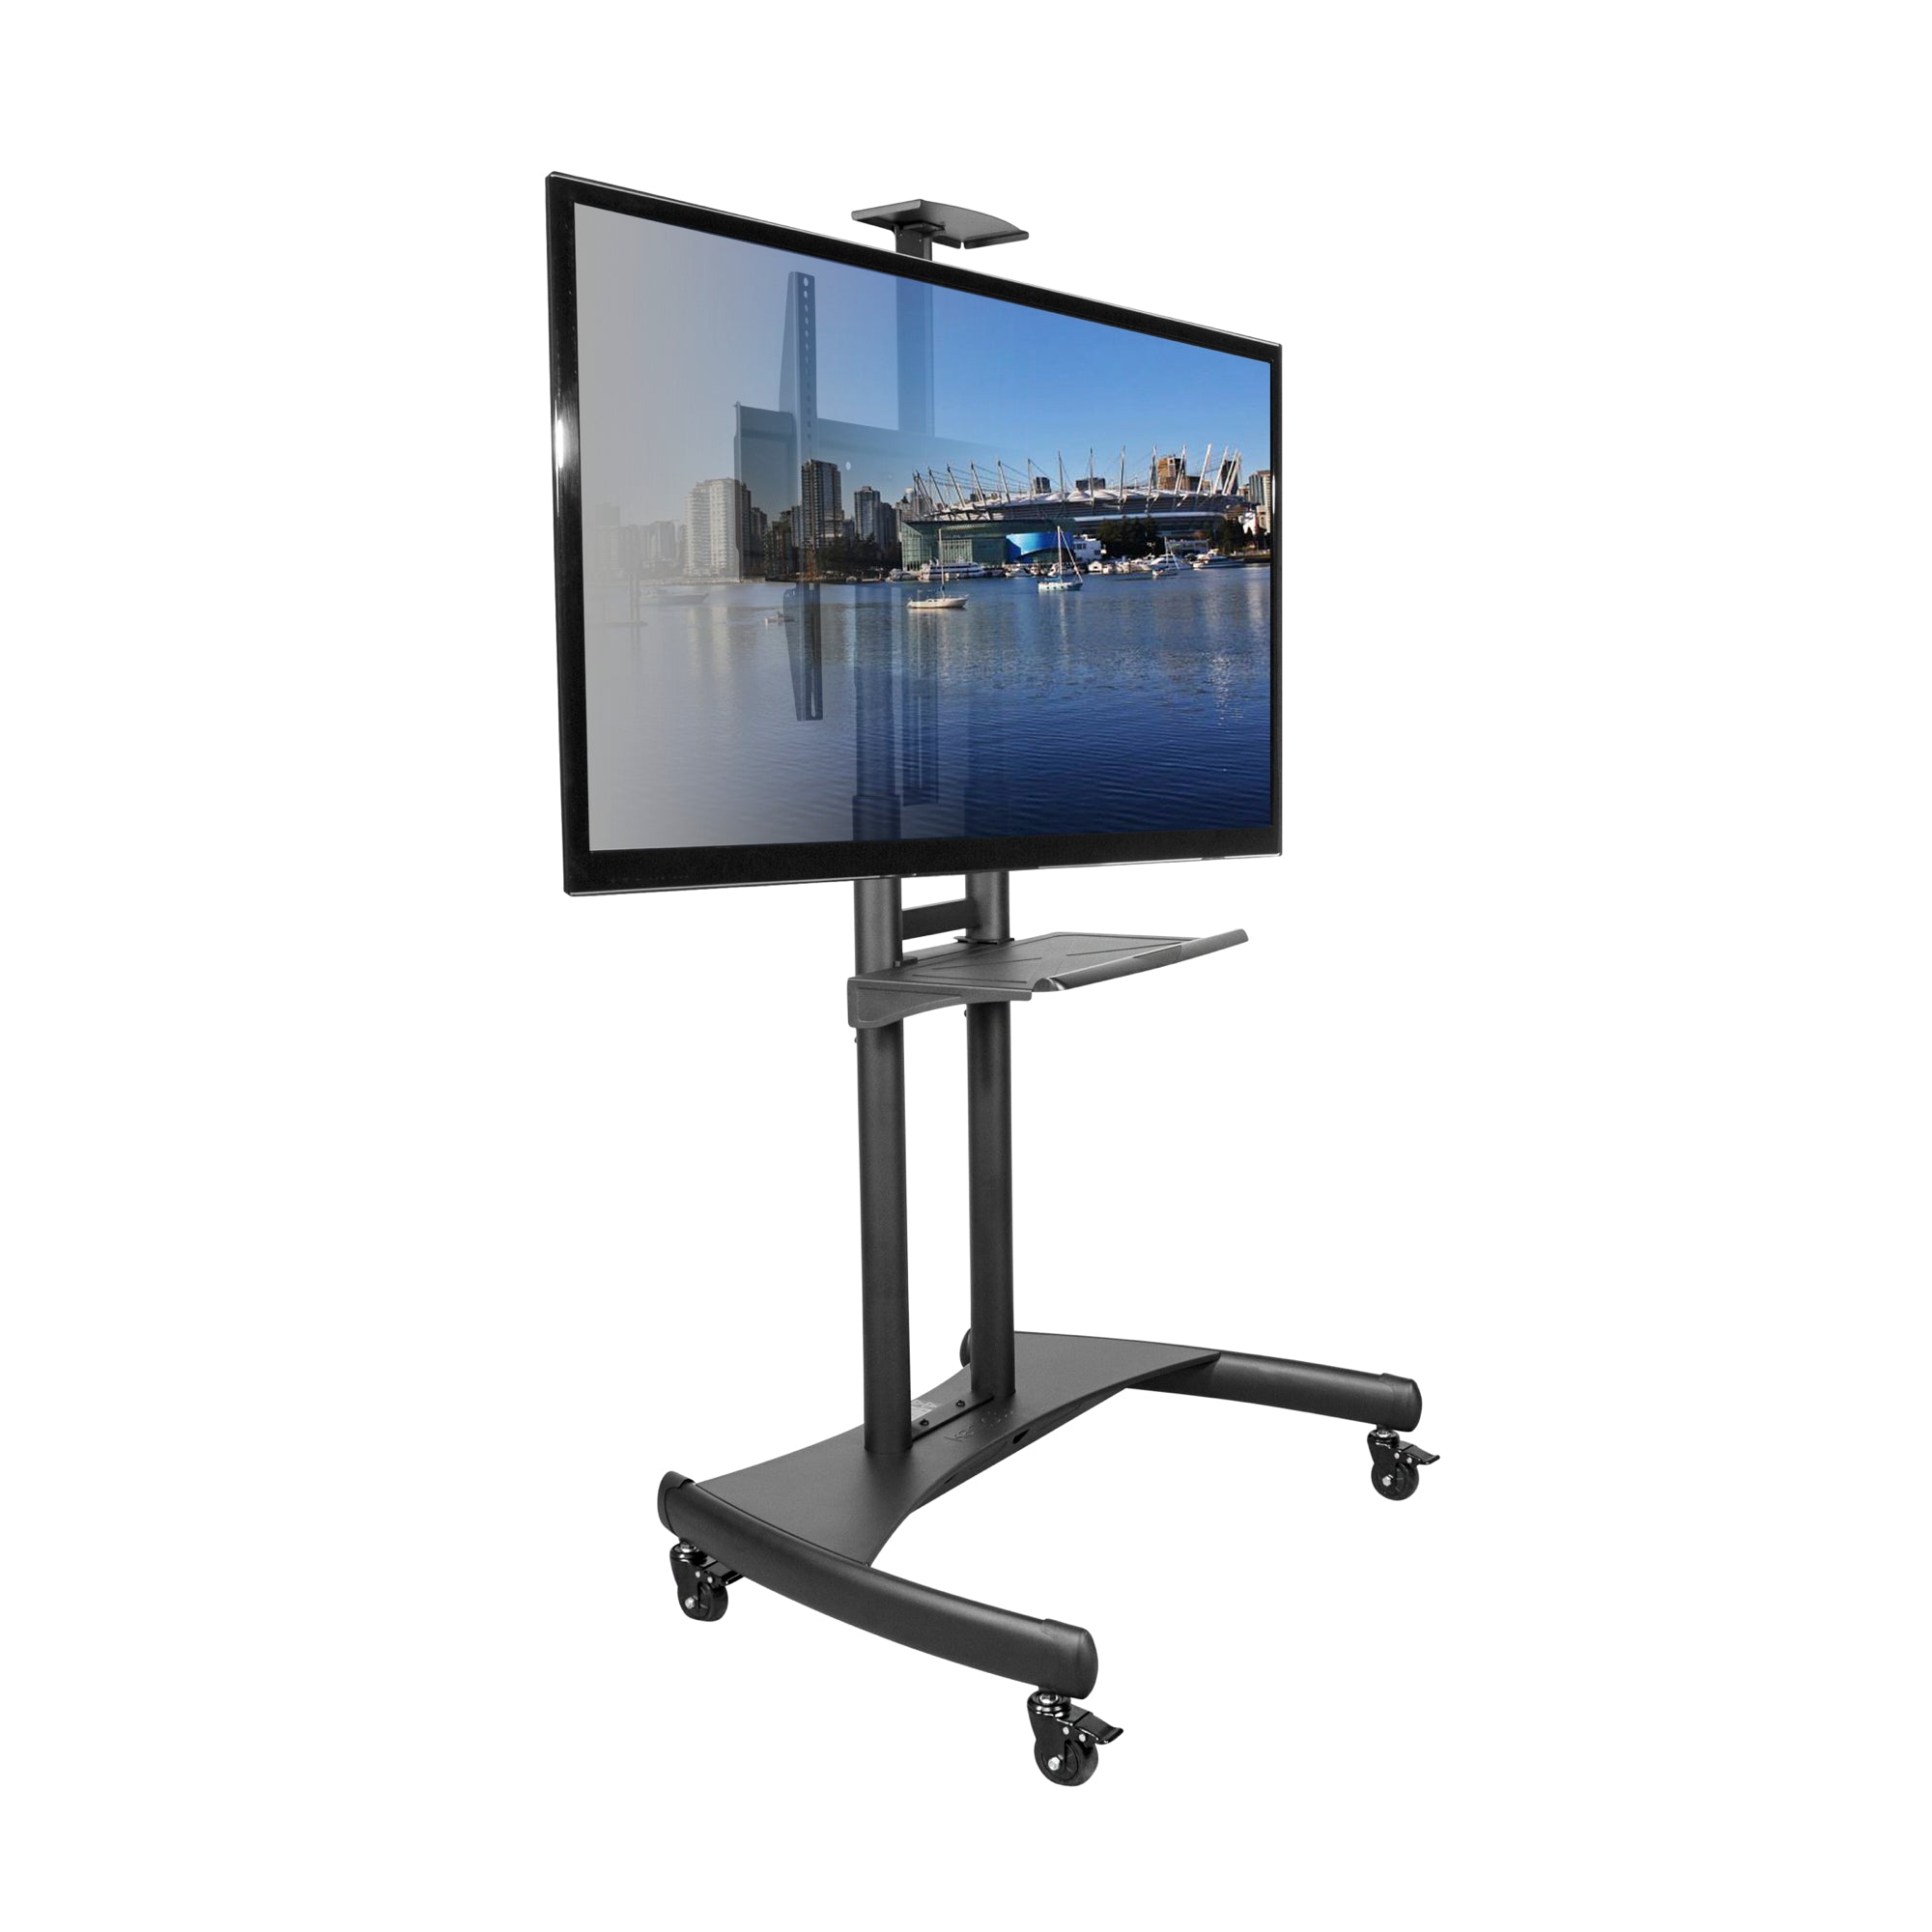 Kanto MTM82PL Mobile TV Mount with Adjustable Shelf for 50-inch to 82-inch TVs - V&L Canada